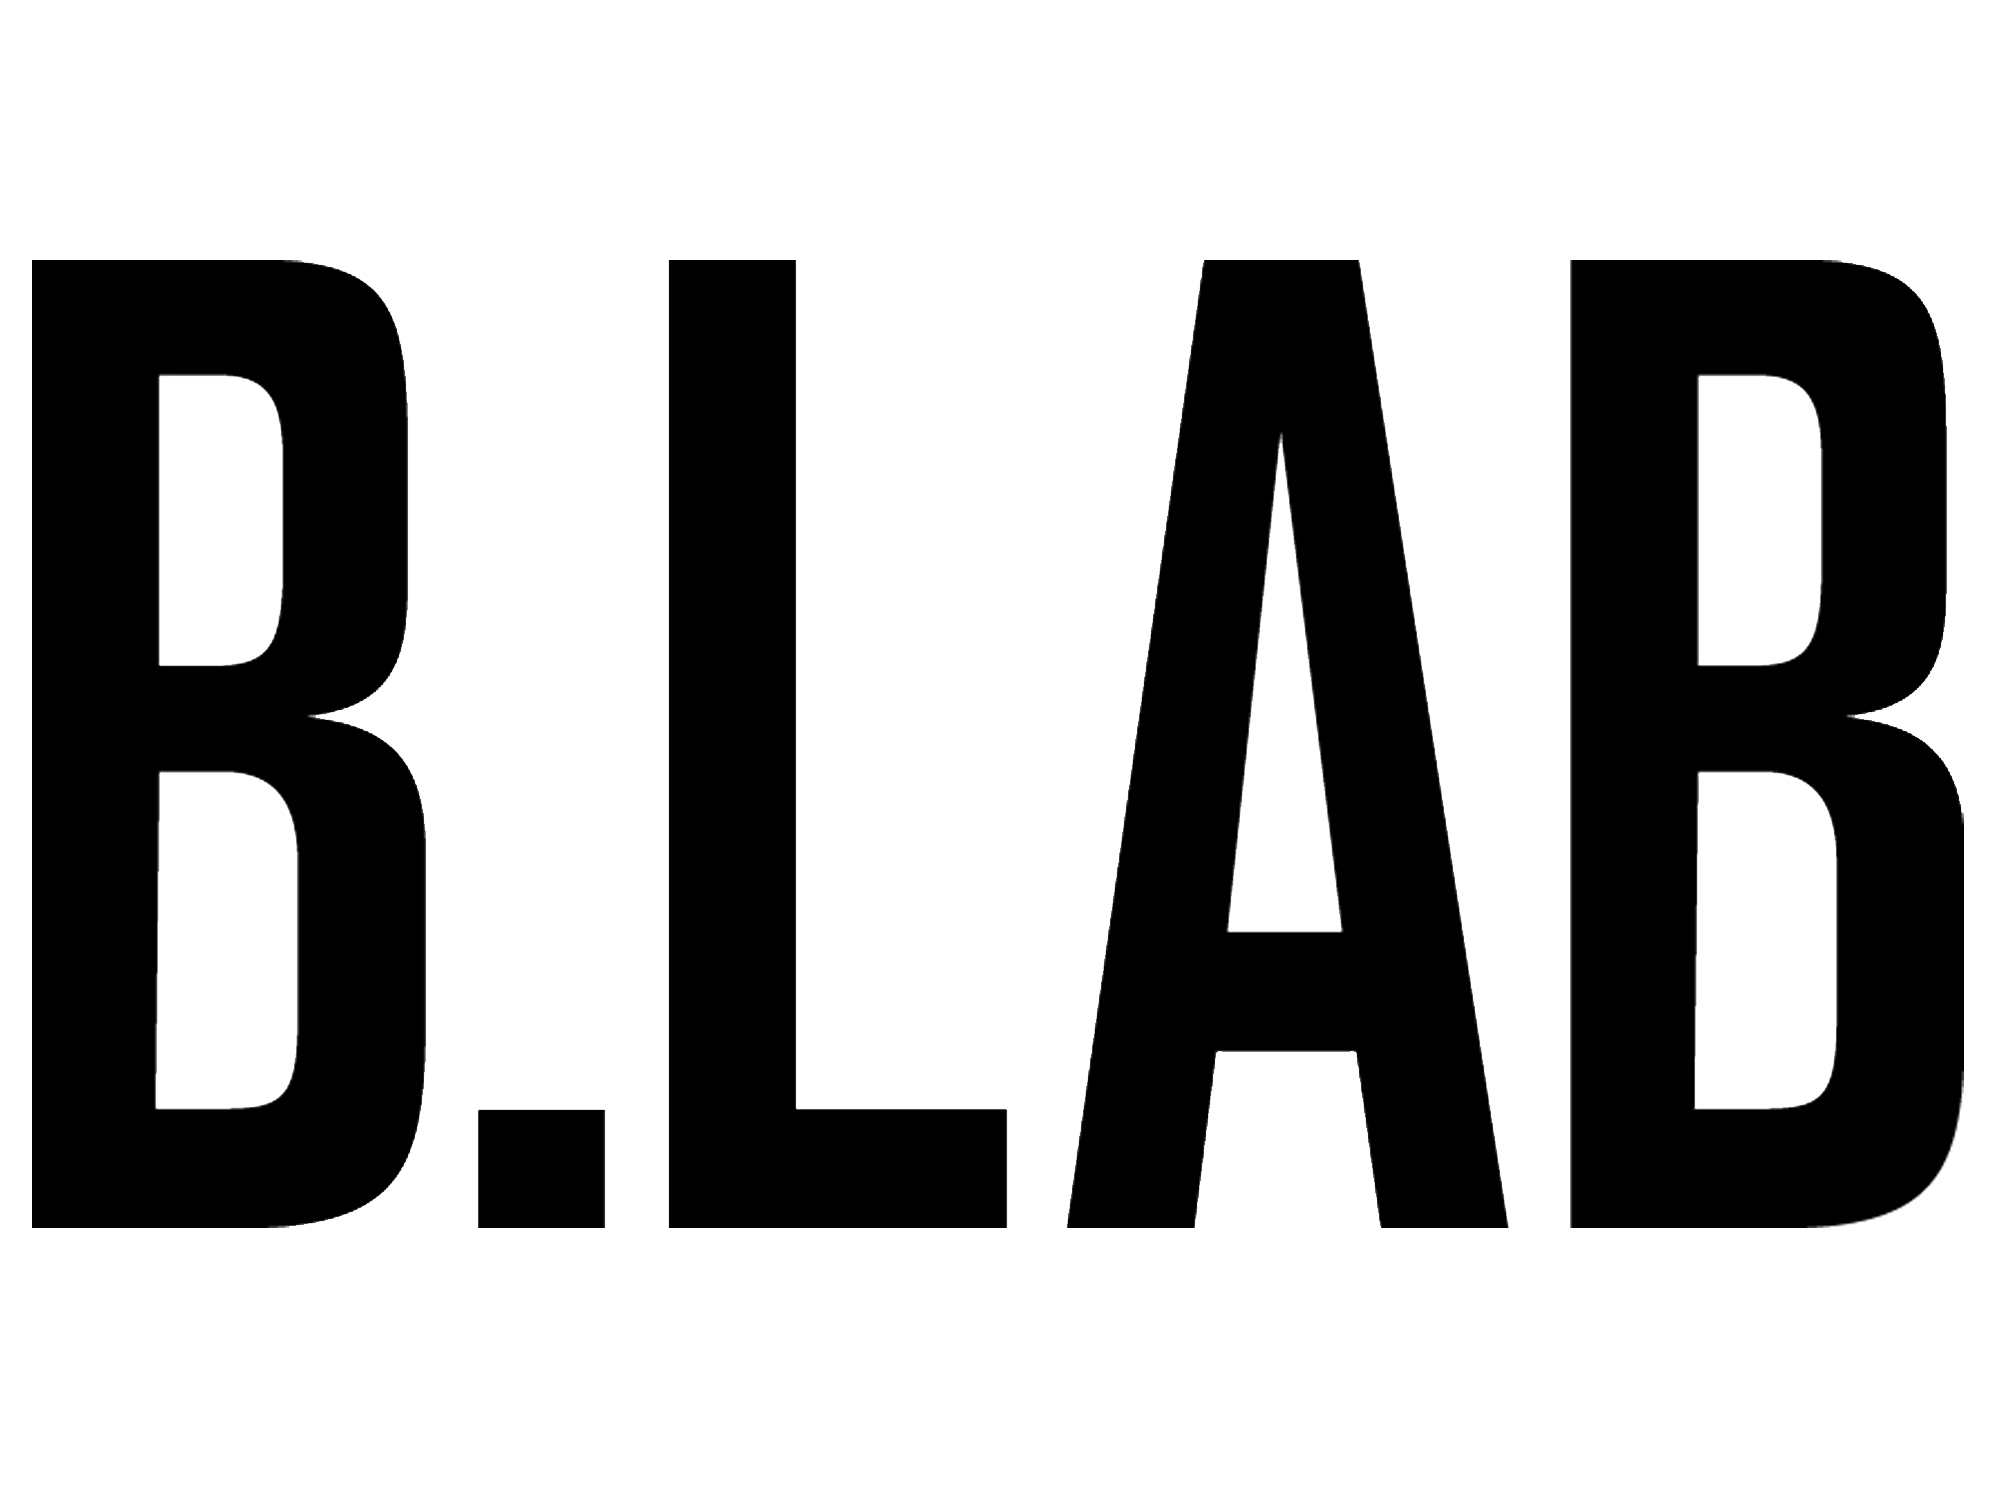 Black Label logo